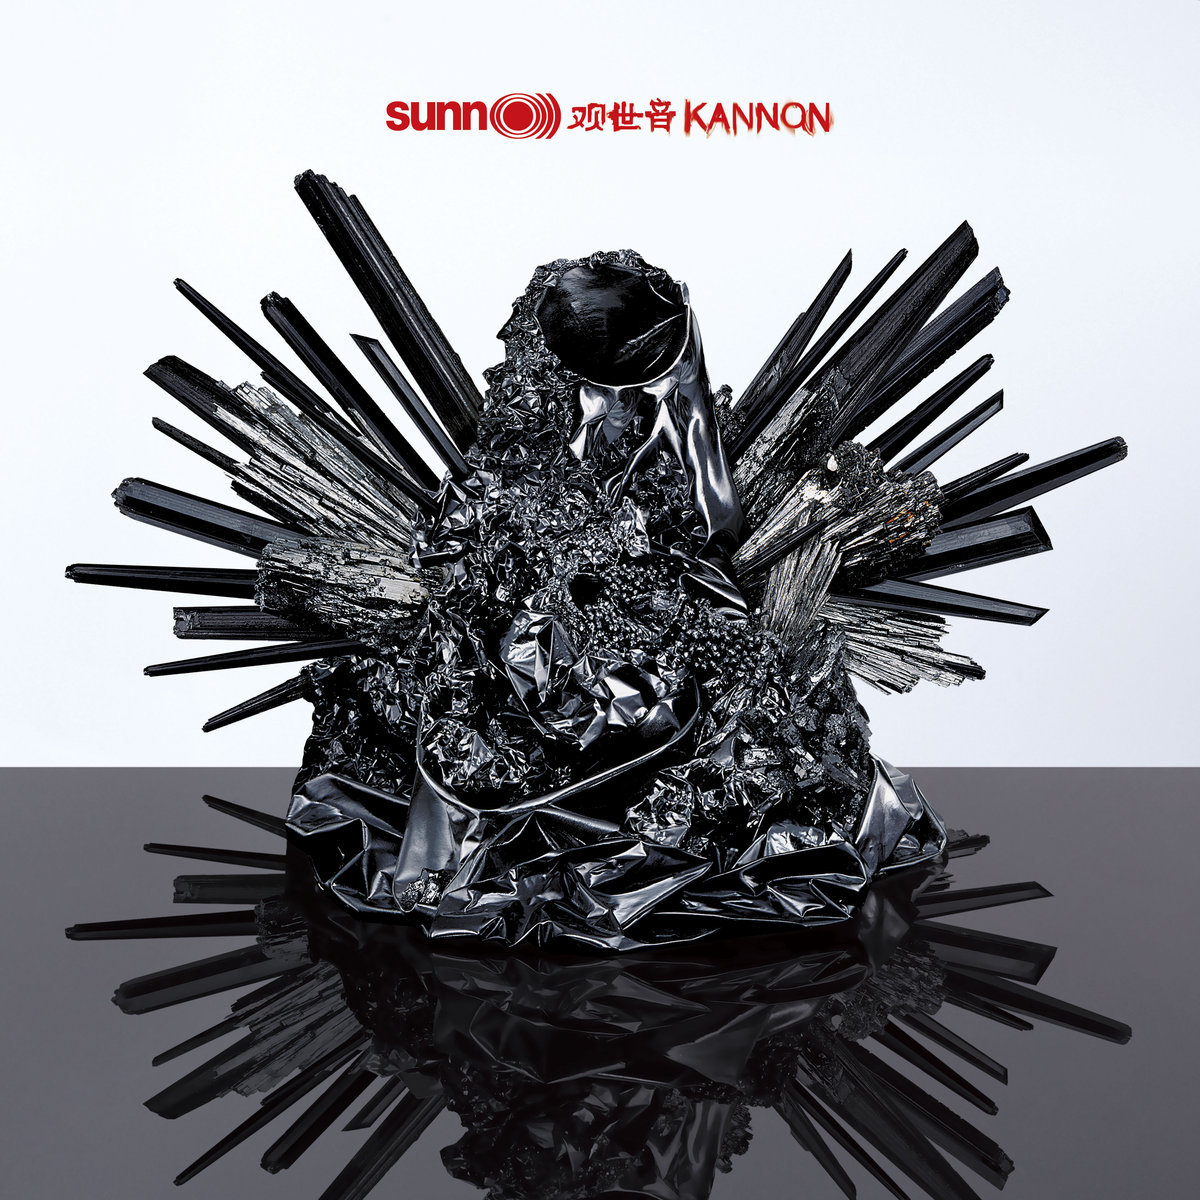 Kannon - new album by SUNN O)))